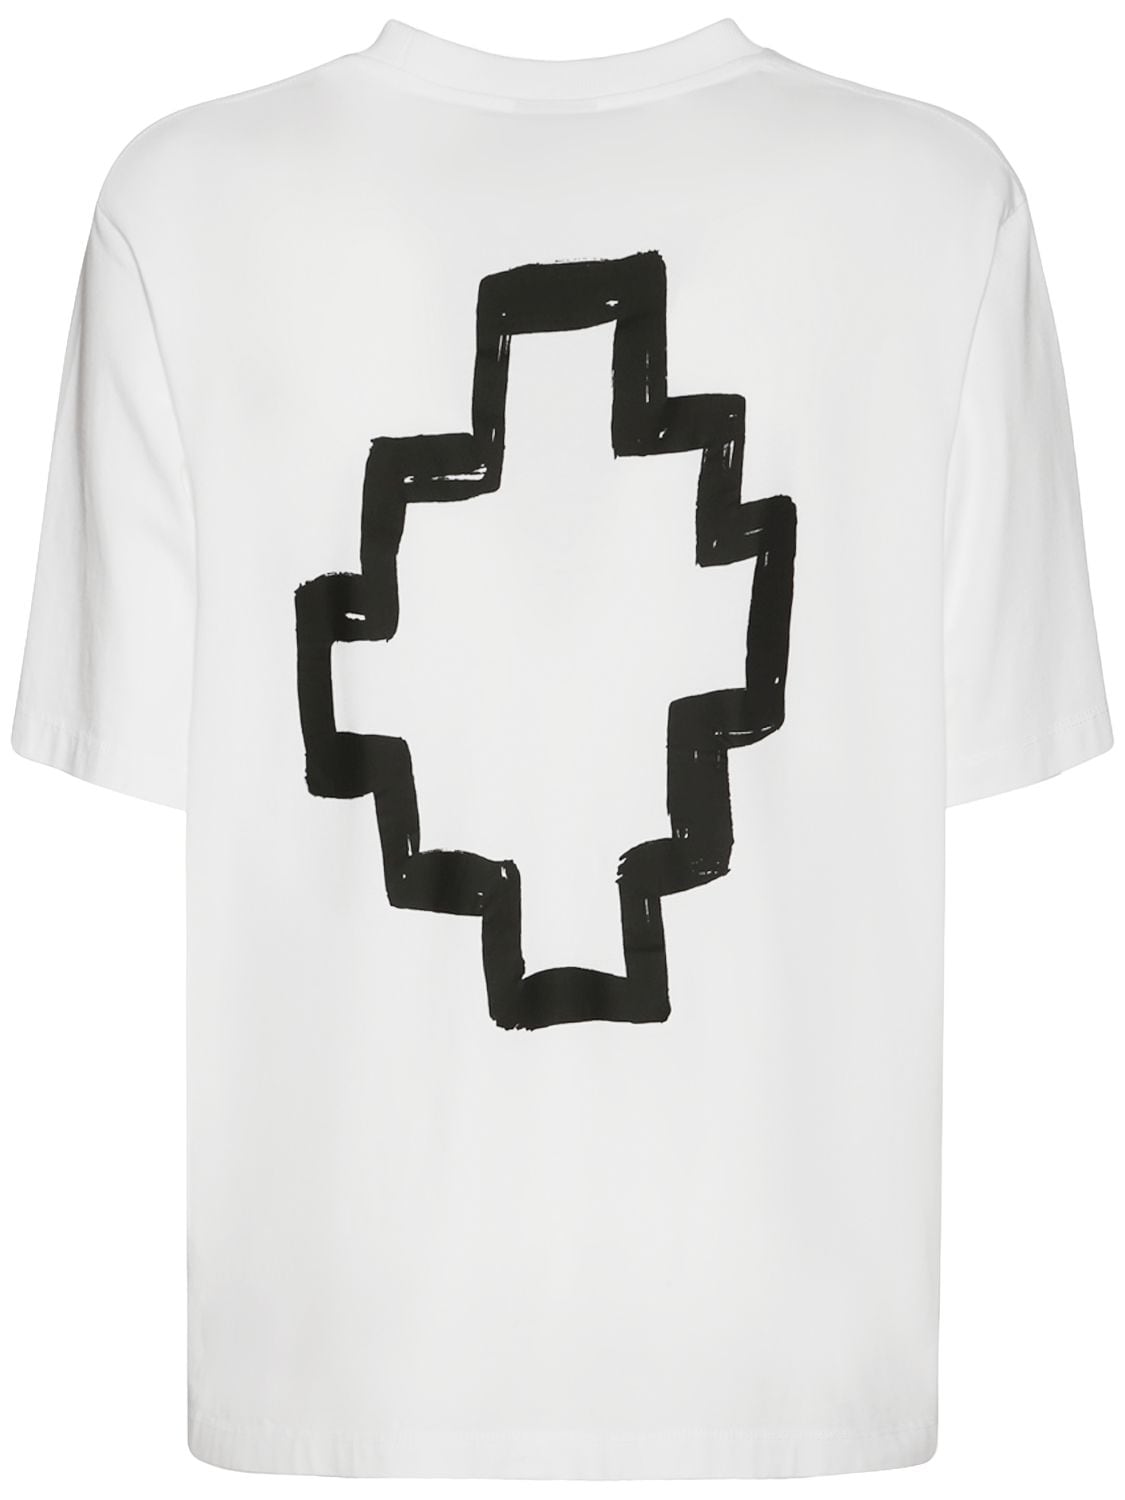 T-shirt Oversize En Coton Imprimé Croix - MARCELO BURLON COUNTY OF MILAN - Modalova